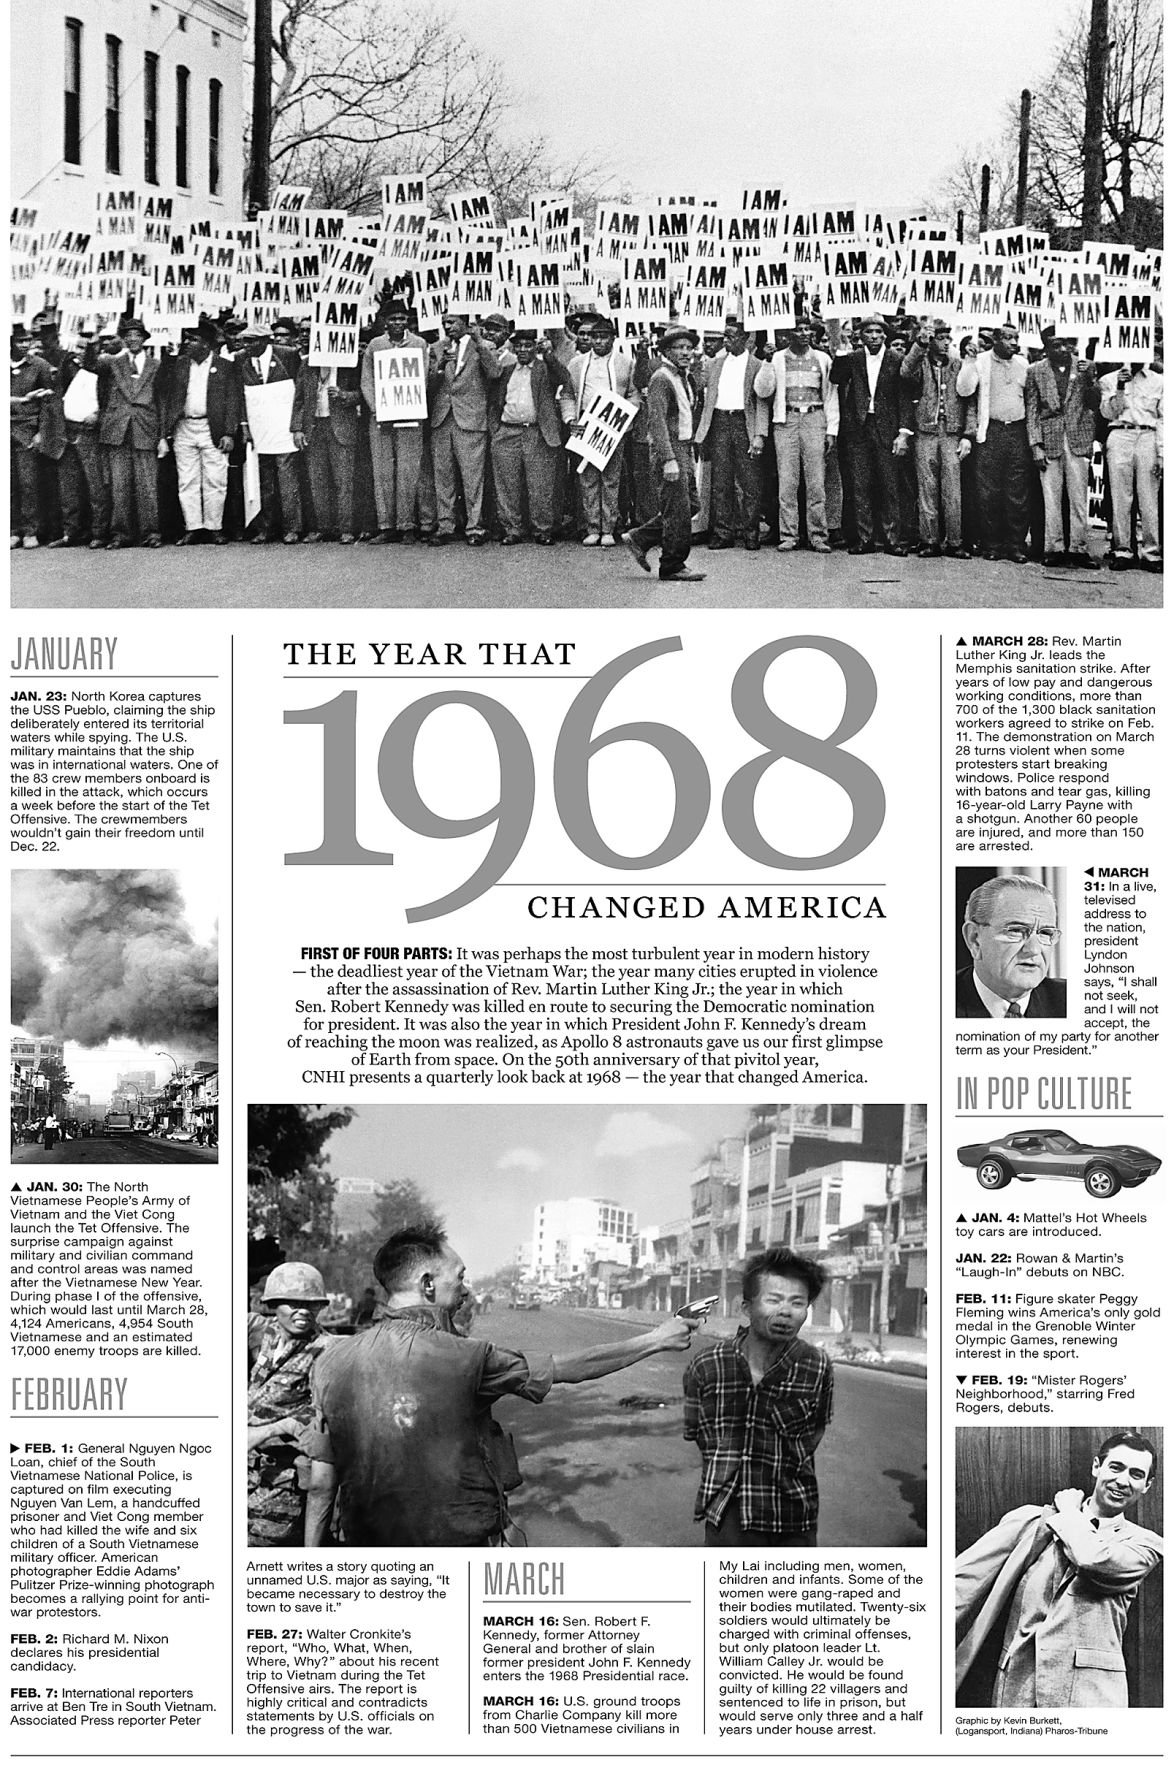 1968: The year that changed America the world News tribdem com